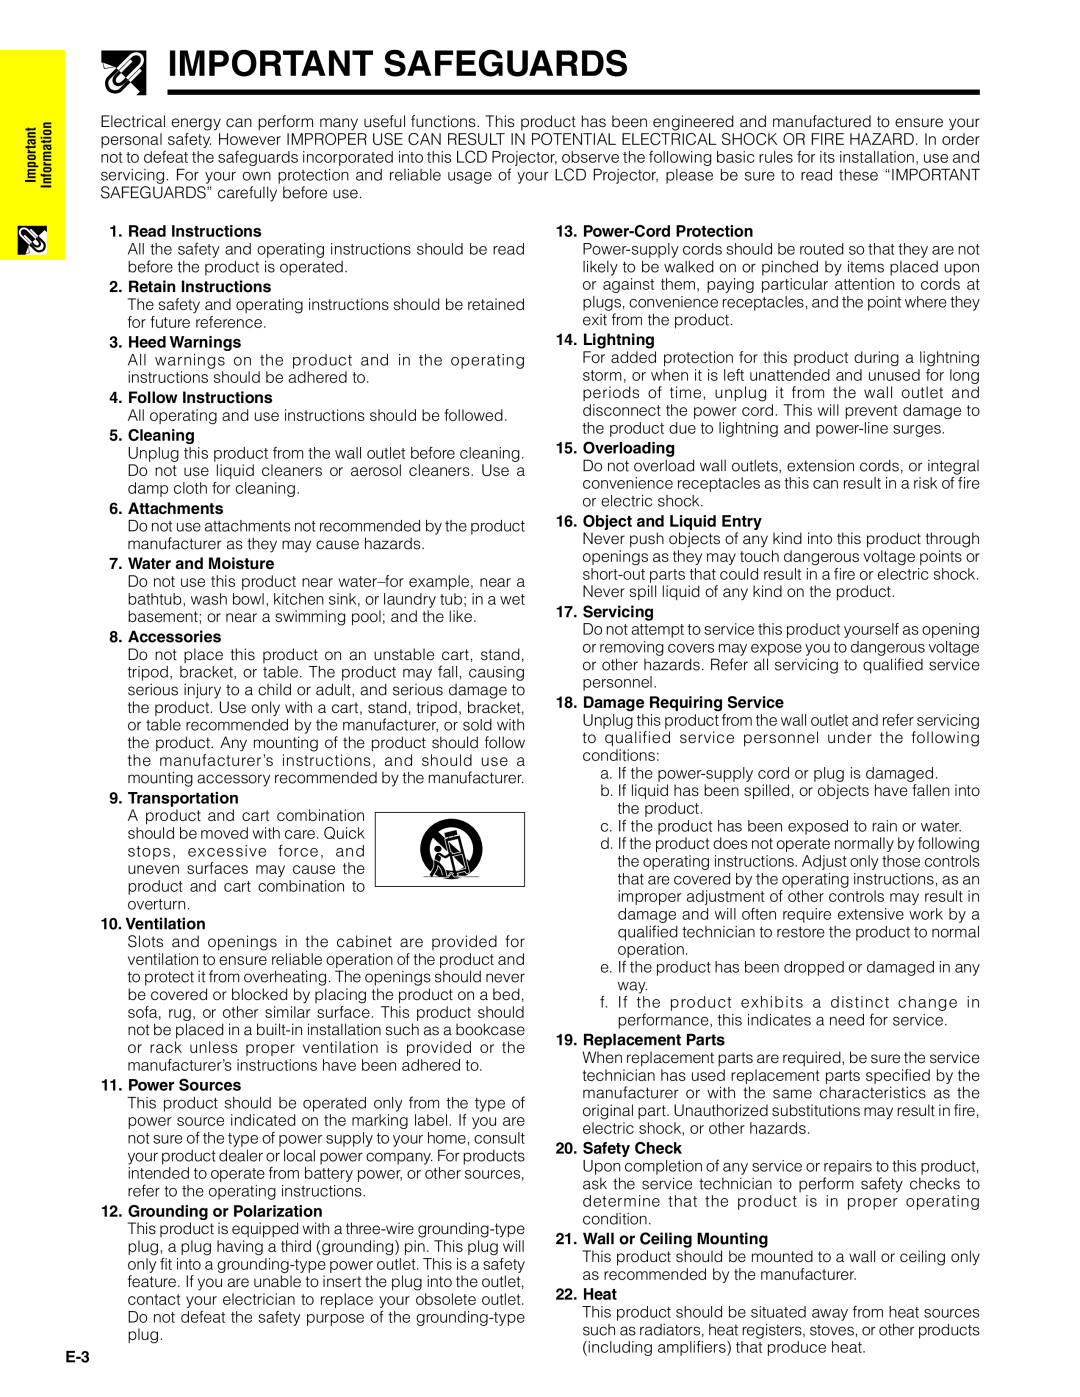 Sharp PG-C20XU operation manual Important Safeguards 